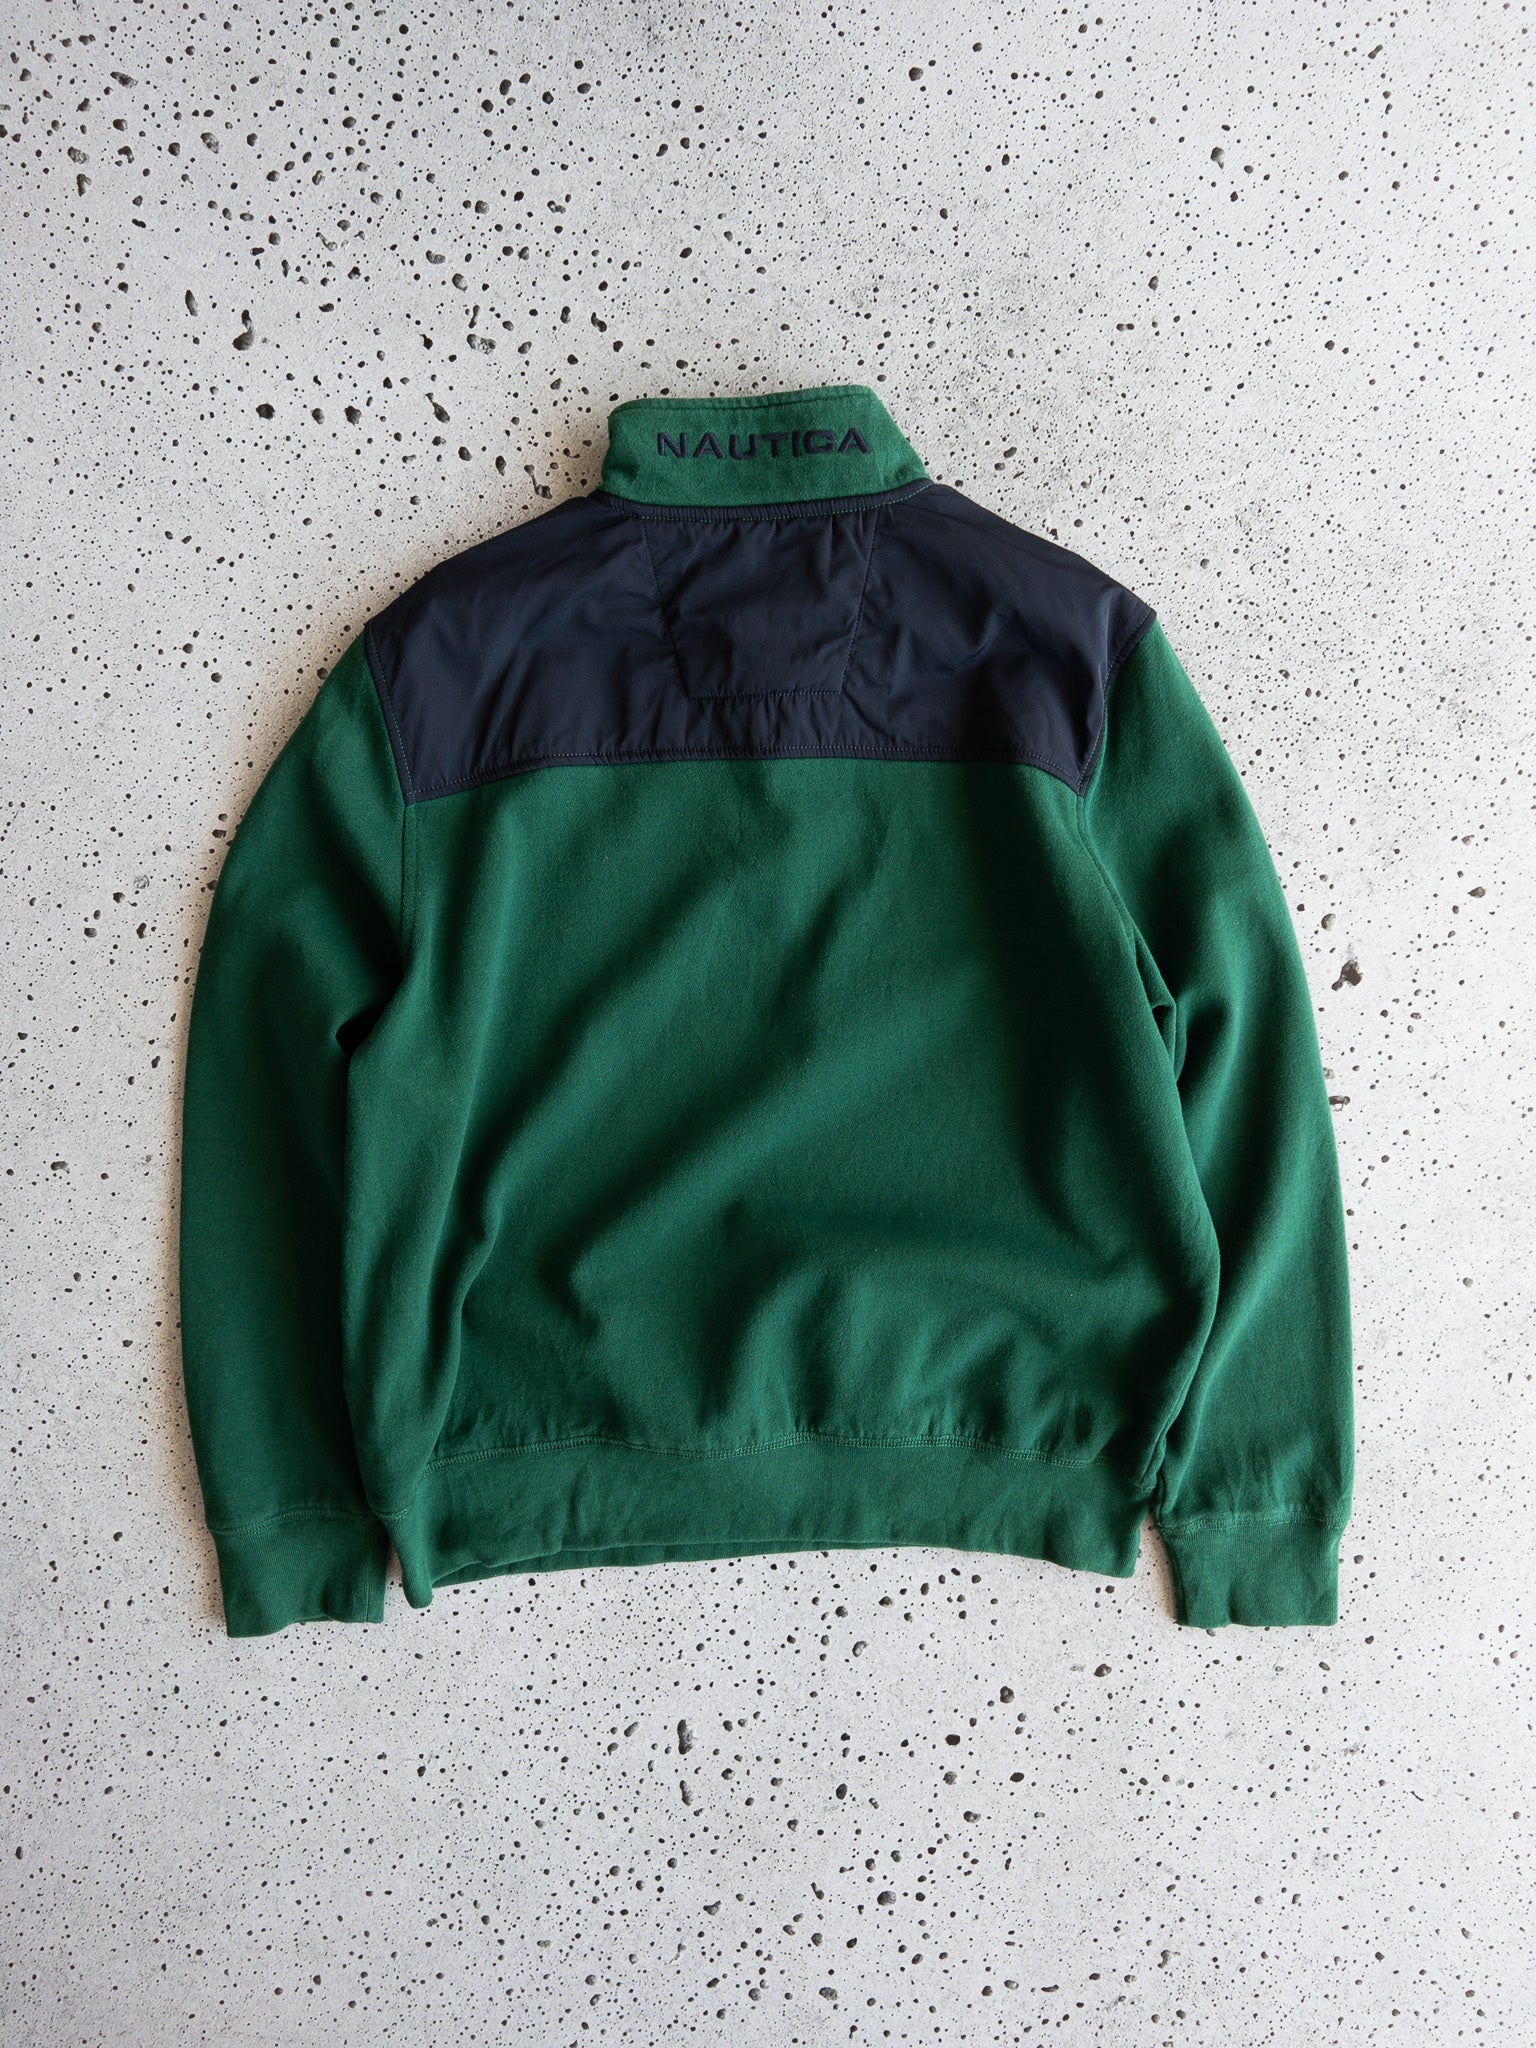 Vintage Nautica Quarter Zip Sweatshirt (L)